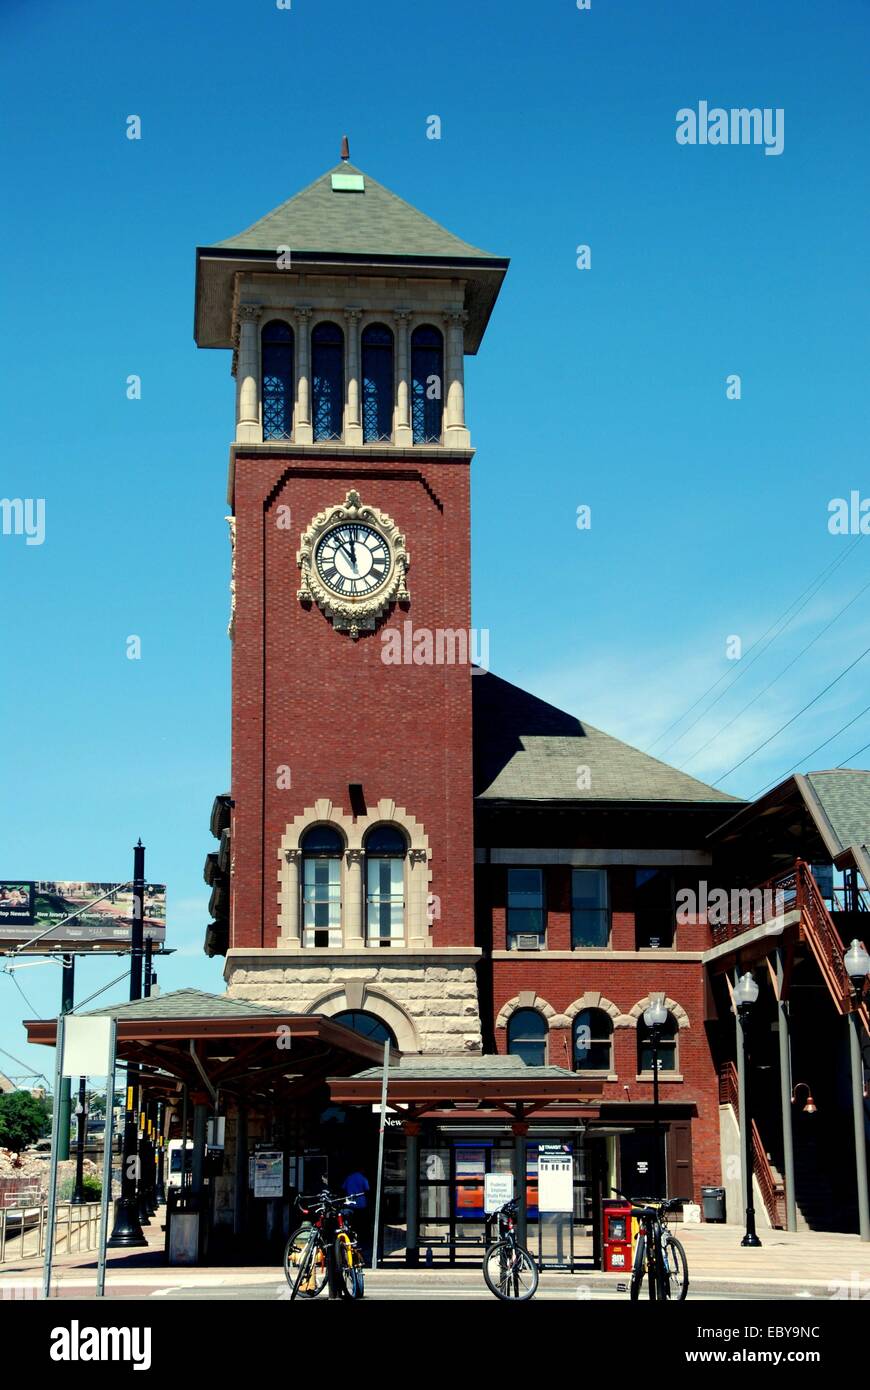 NEWARK, NEW JERSEY:  The landmarked clock tower at the NJ Transit Broad Street Railway Station Stock Photo